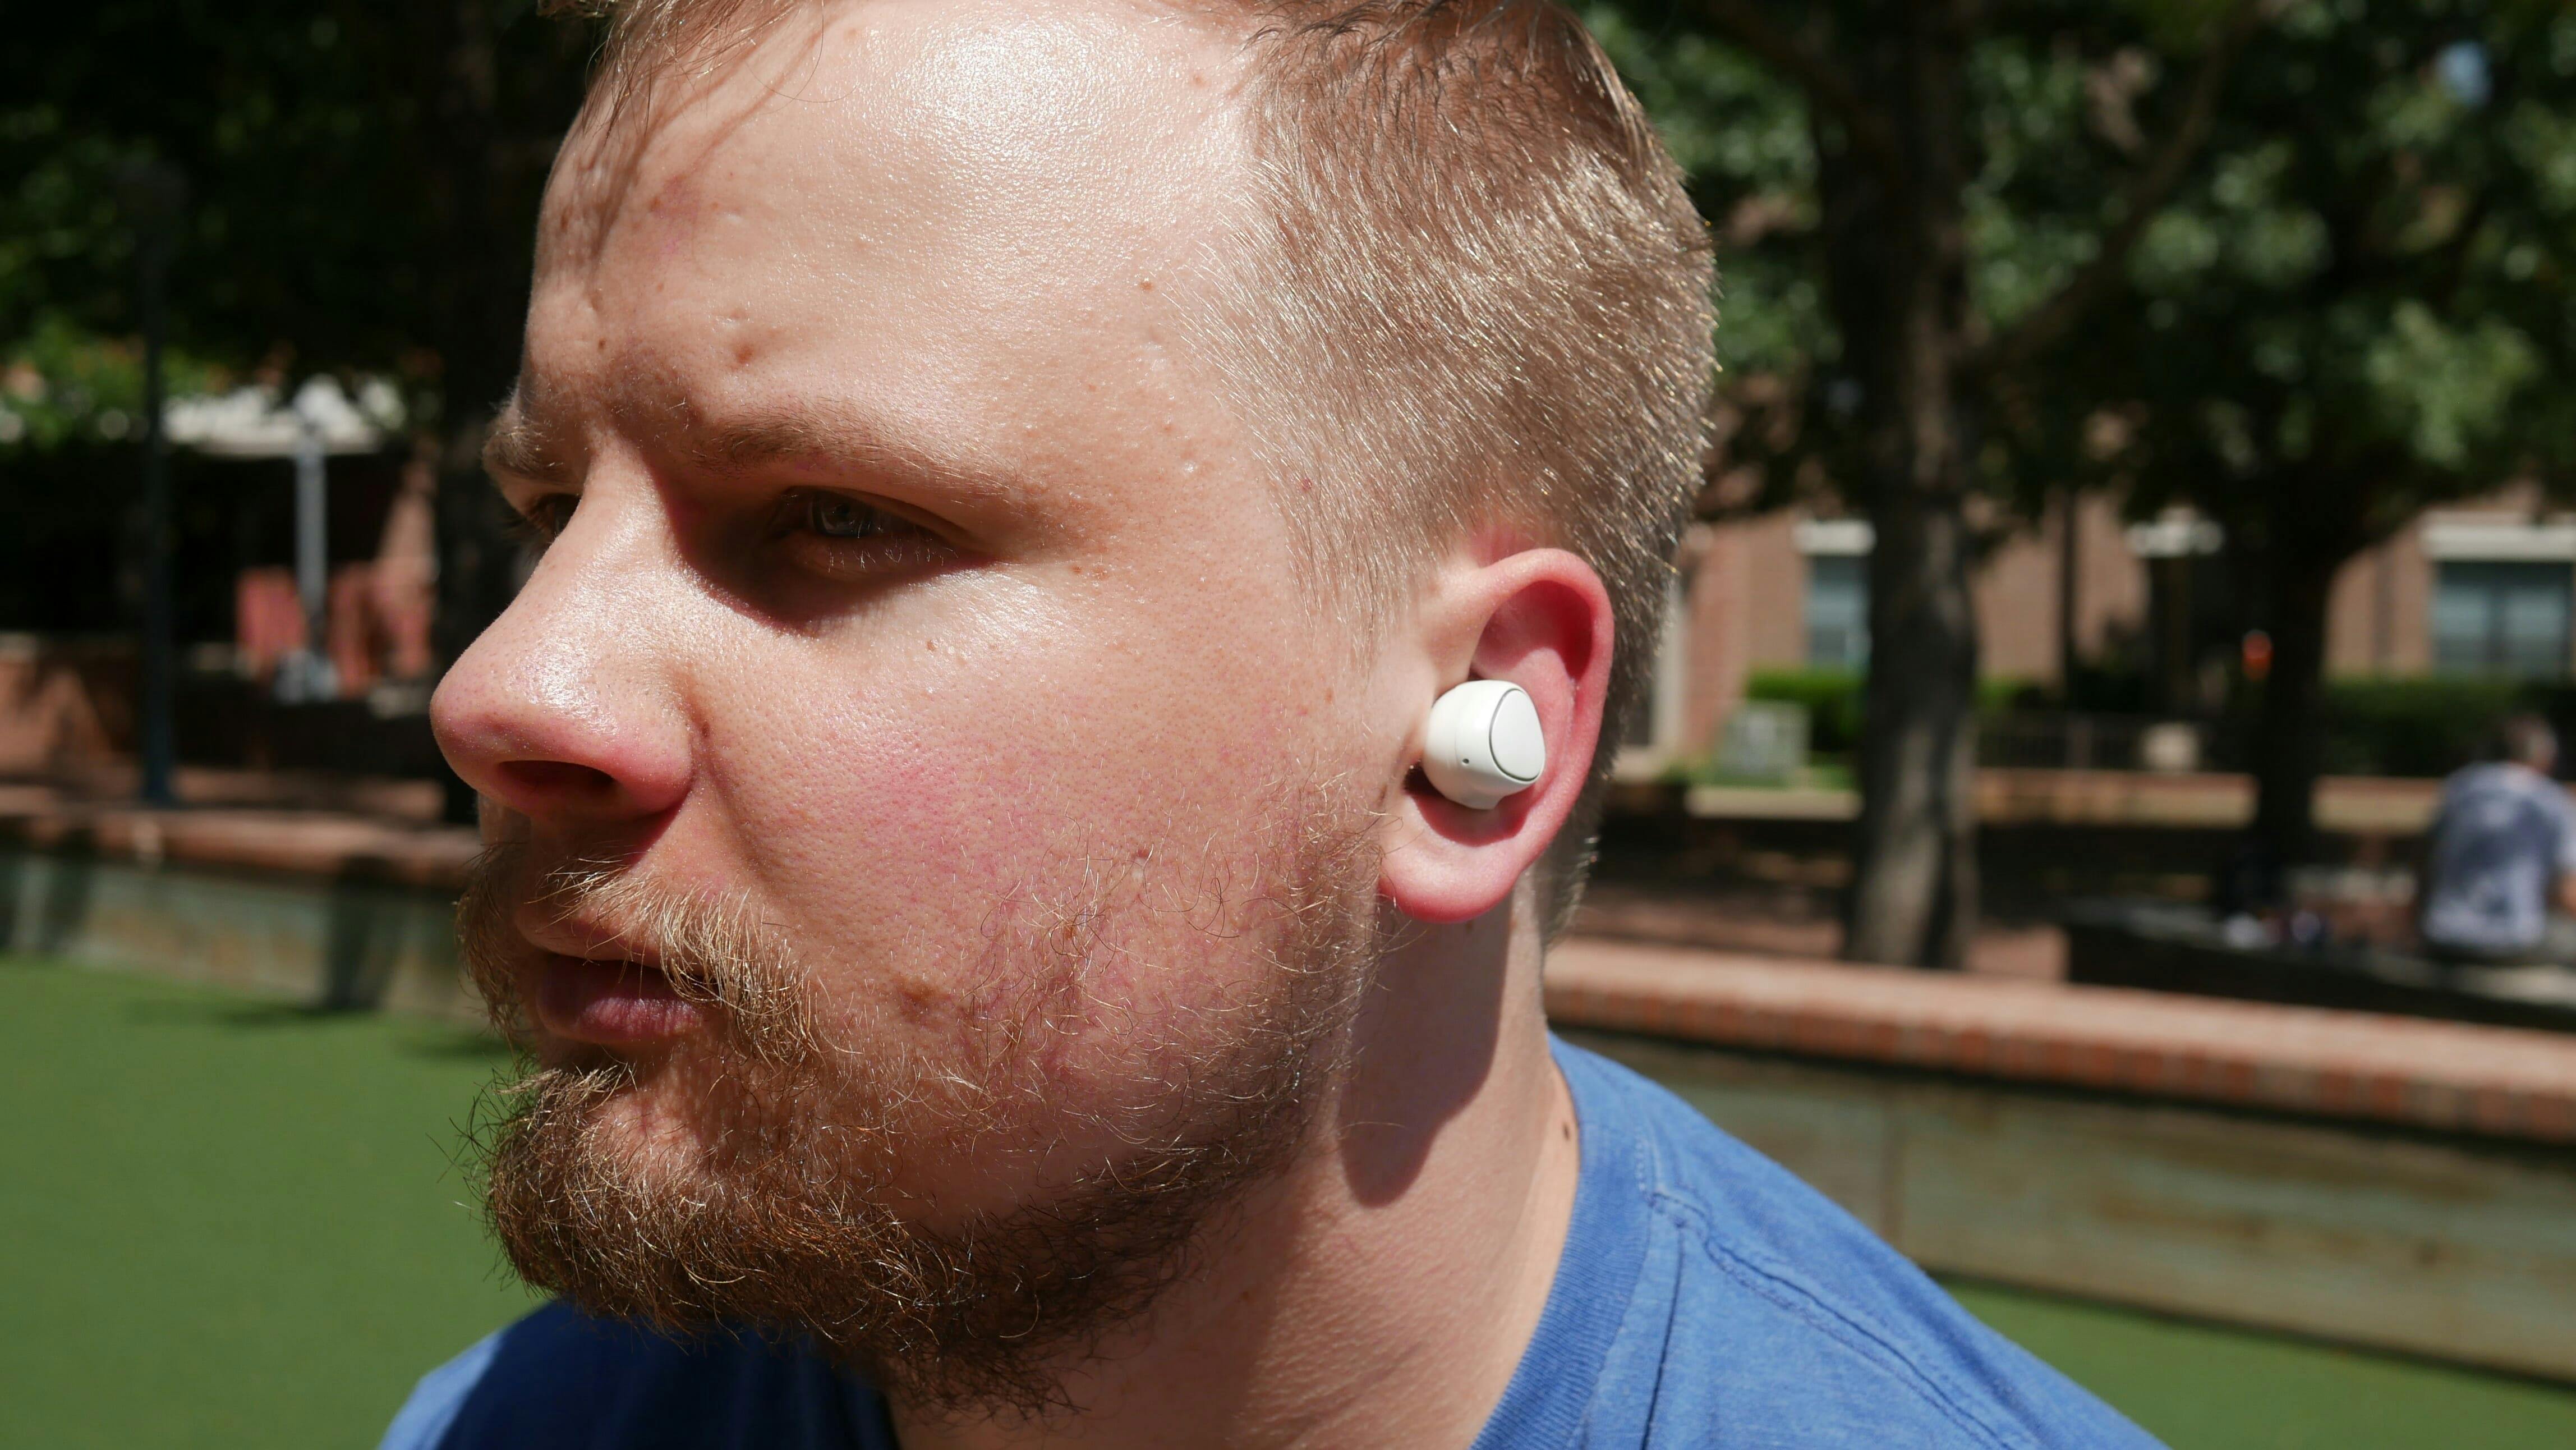 samsung gear iconx wireless earbuds looks design